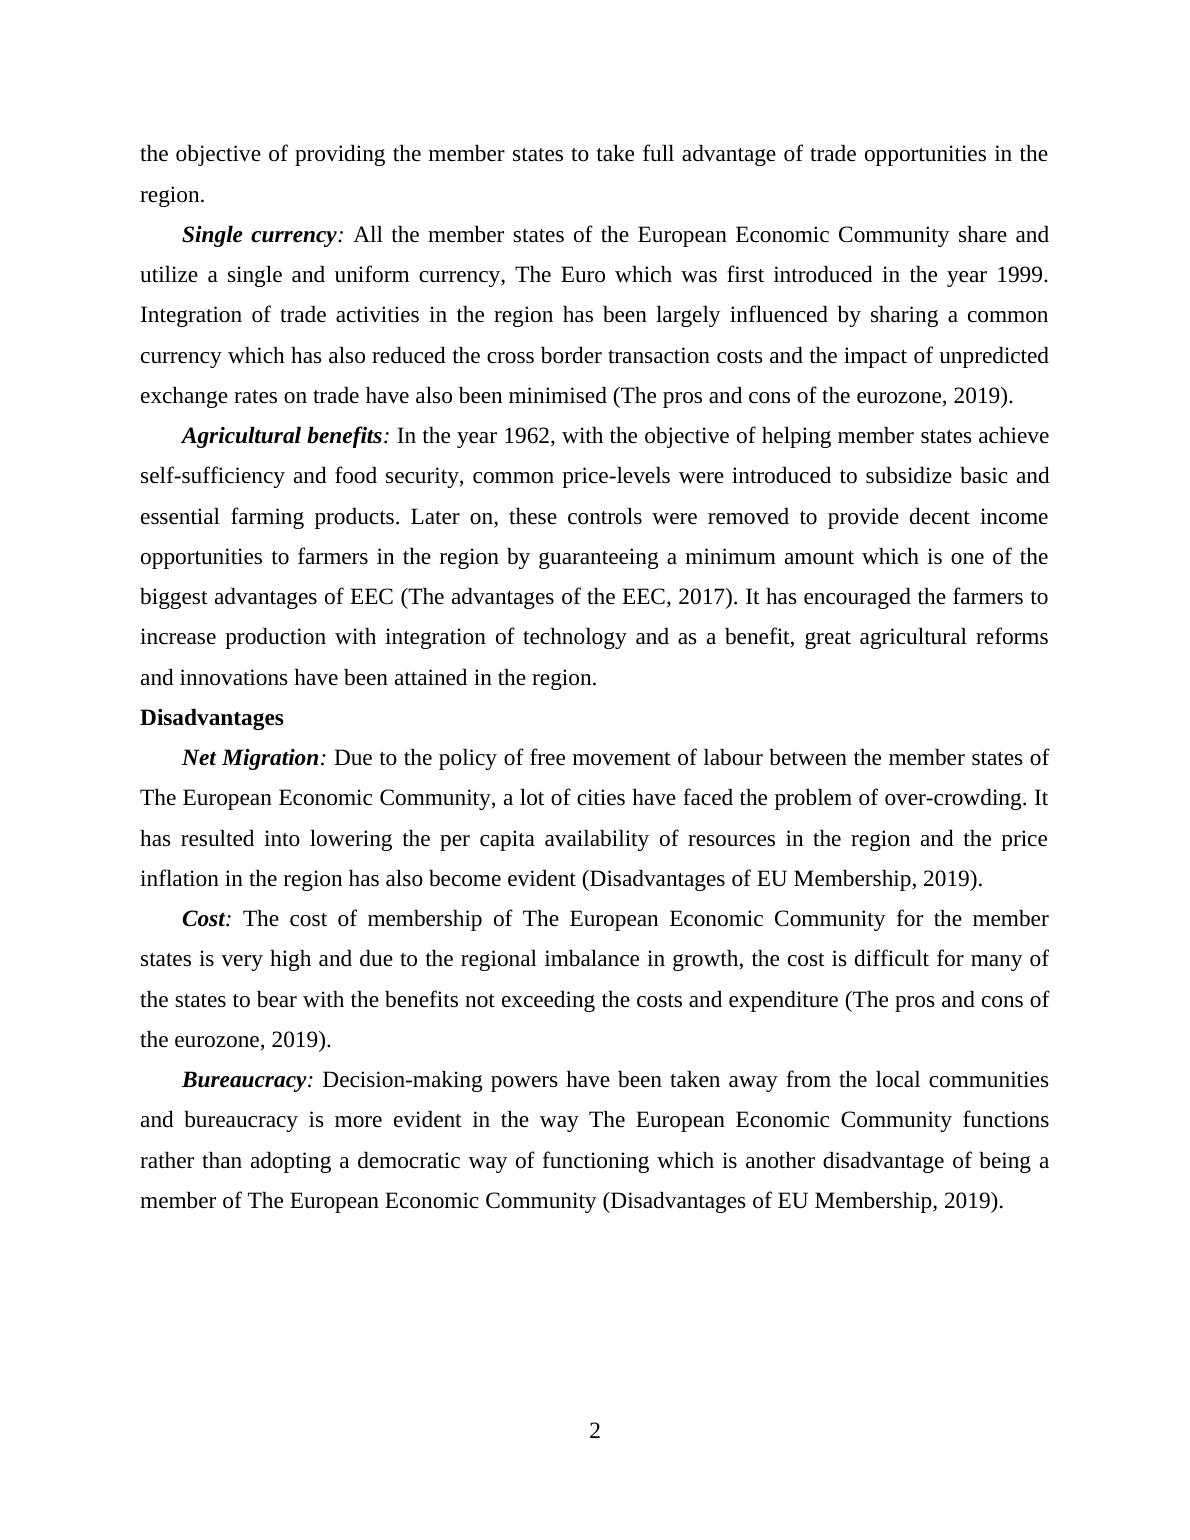 Global Business: The European Economic Community, MNCs Internationalisation, and Market Entry Analysis of Tesco_4